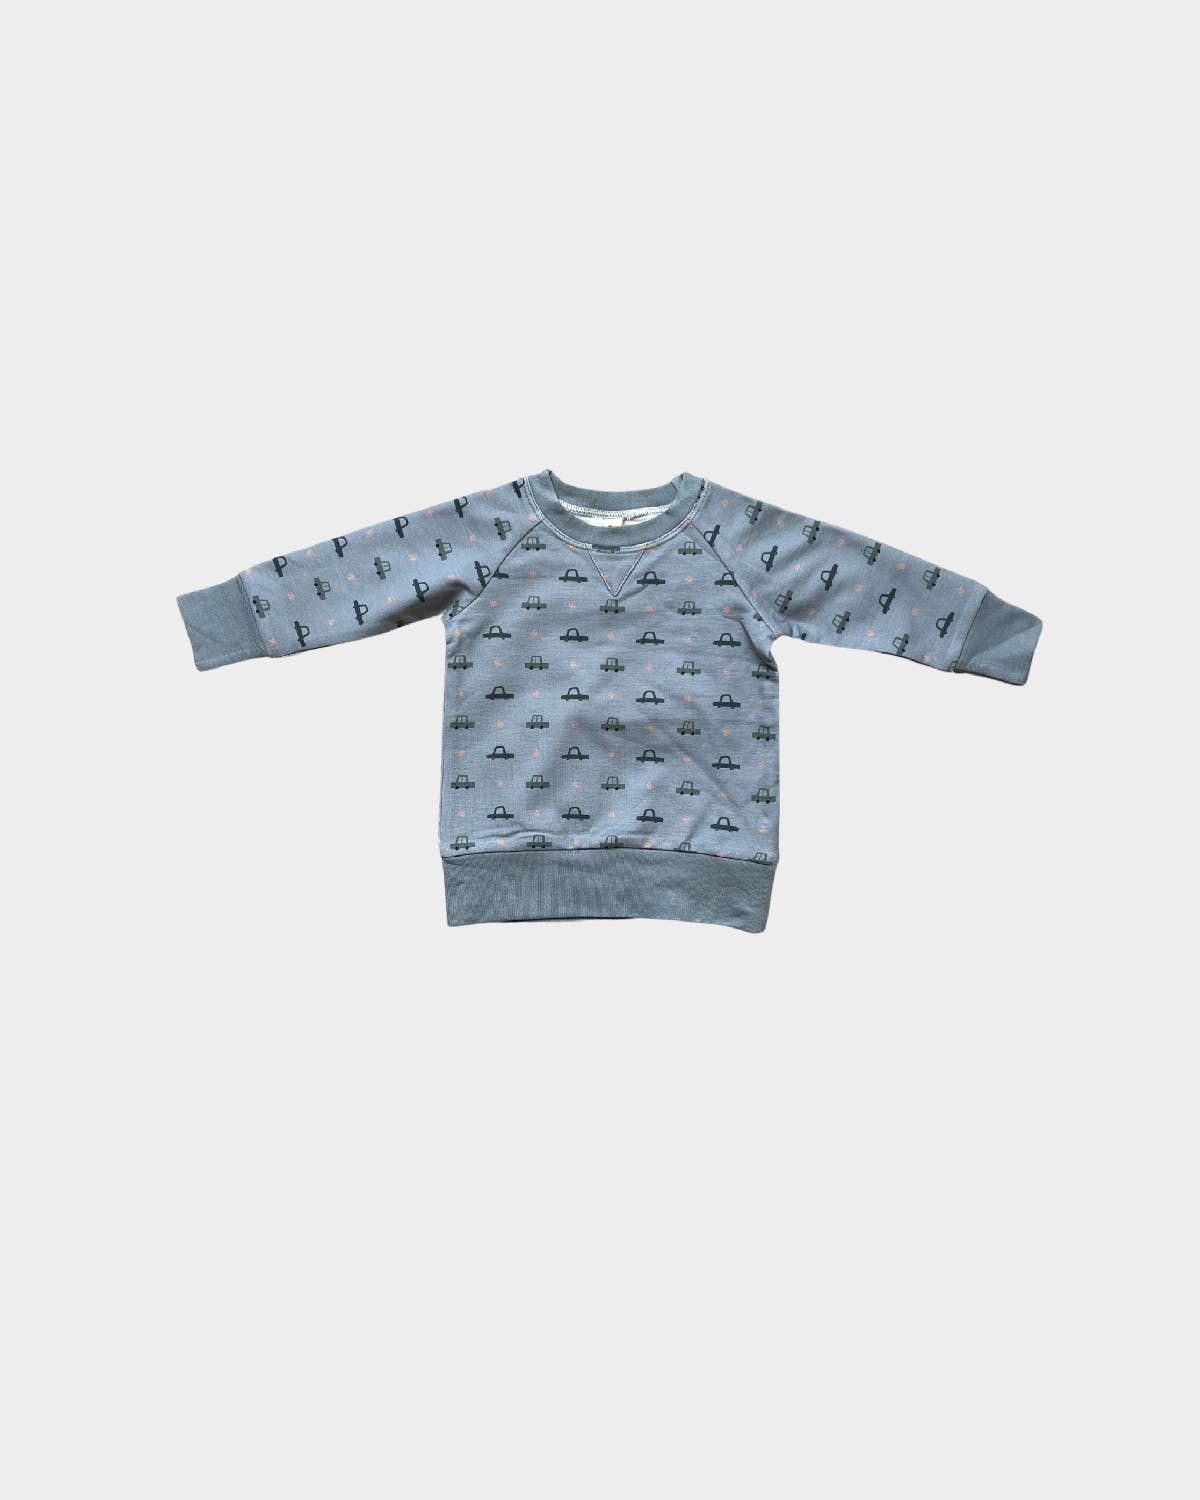 babysprouts clothing company - F23 D2: Kid's Raglan Sweatshirt in Retro Cars